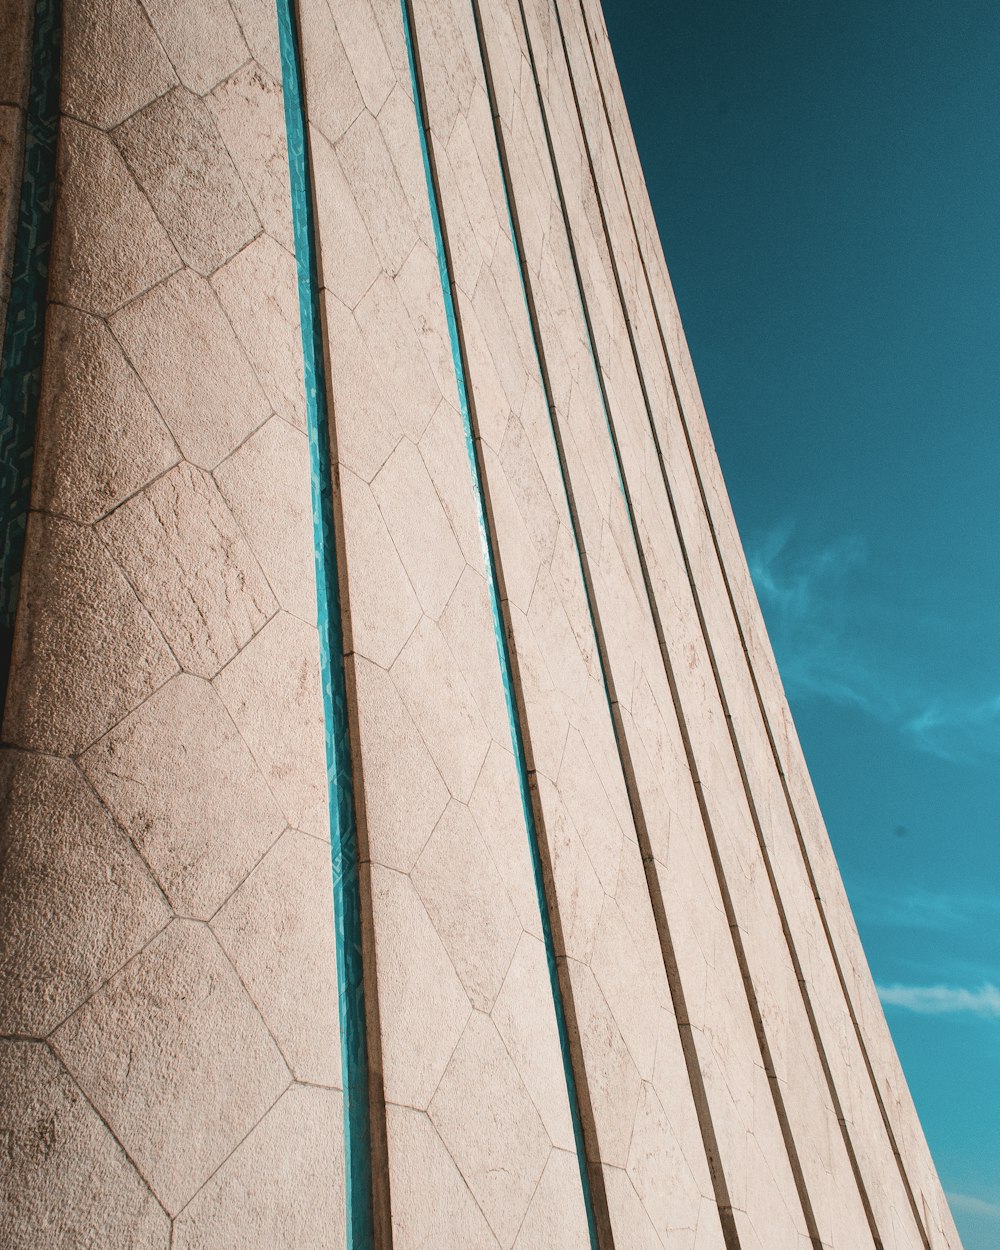 edifício de concreto cinza sob céu azul durante o dia